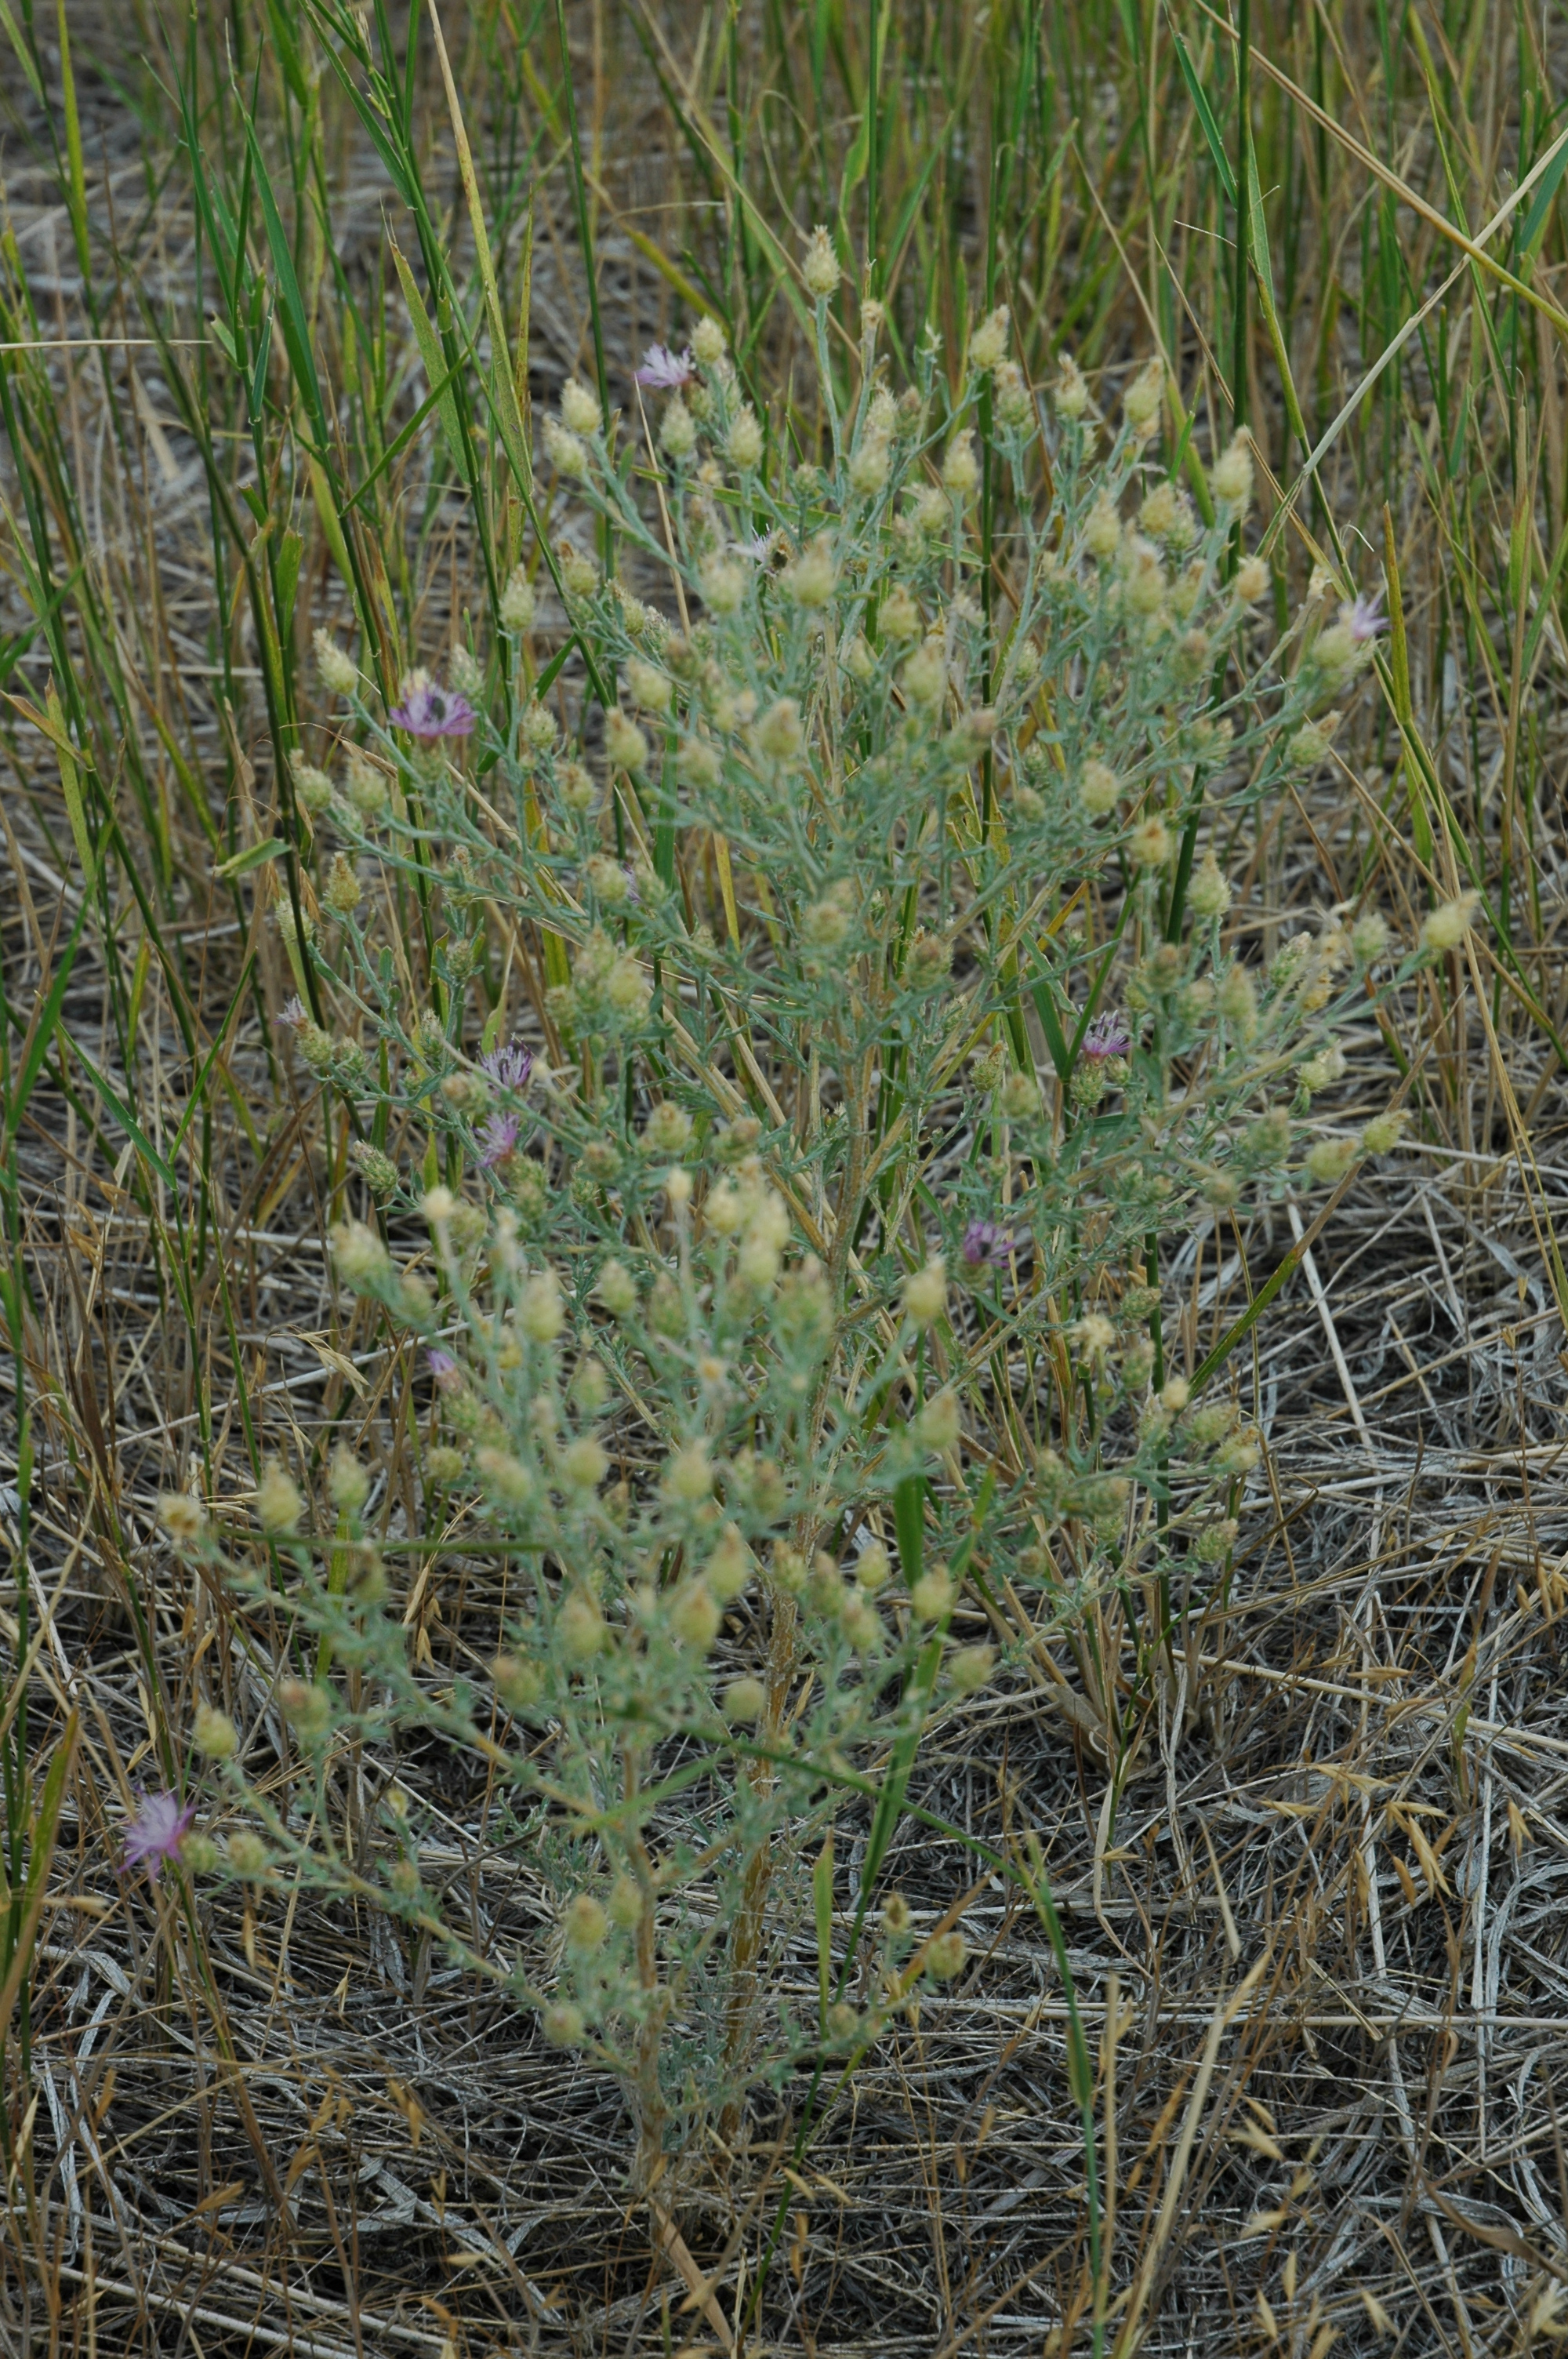 Centaurea-diffusa-diffuse-knapweed-plant